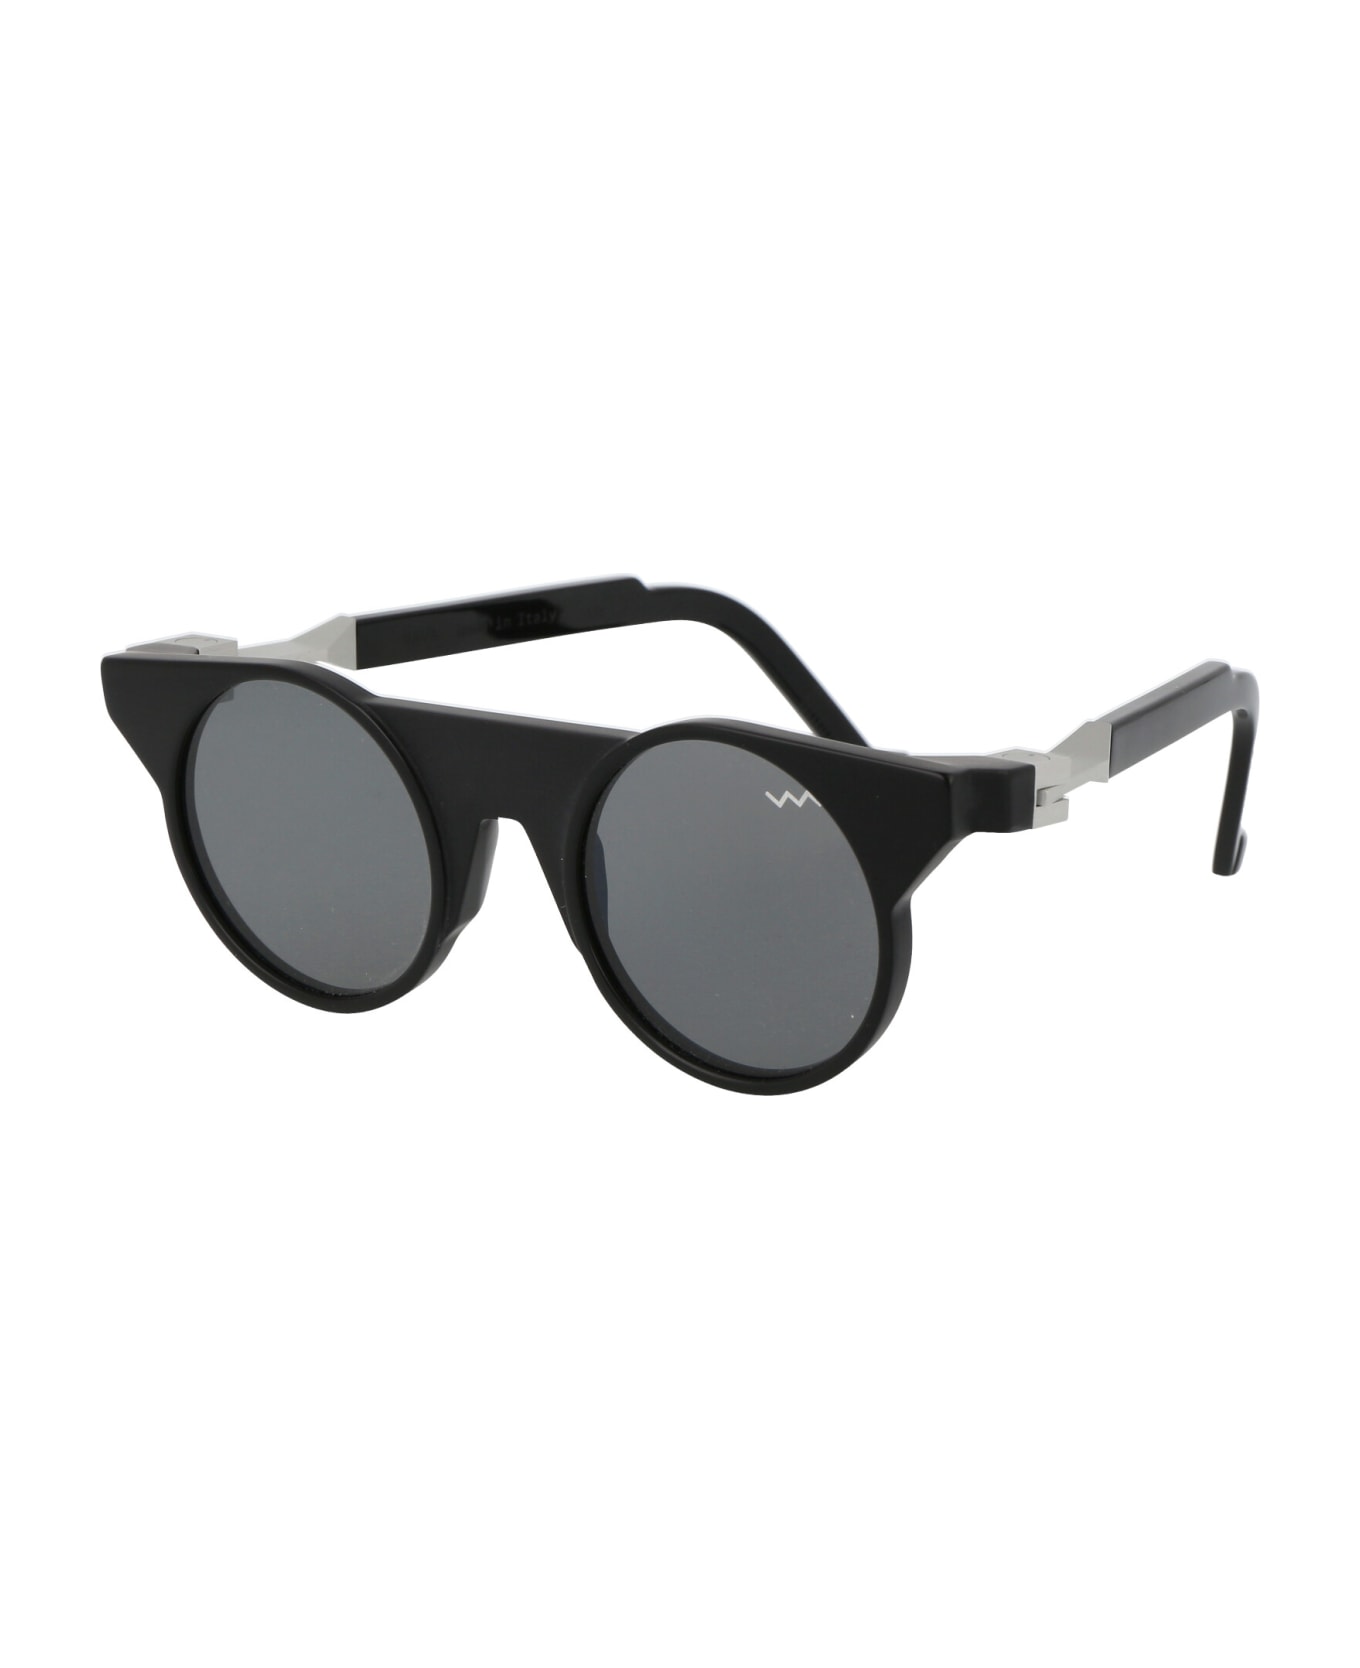 VAVA Bl0013 Sunglasses - BLACK SILVER LEX HINGES BLACK LENSES EURO サングラス